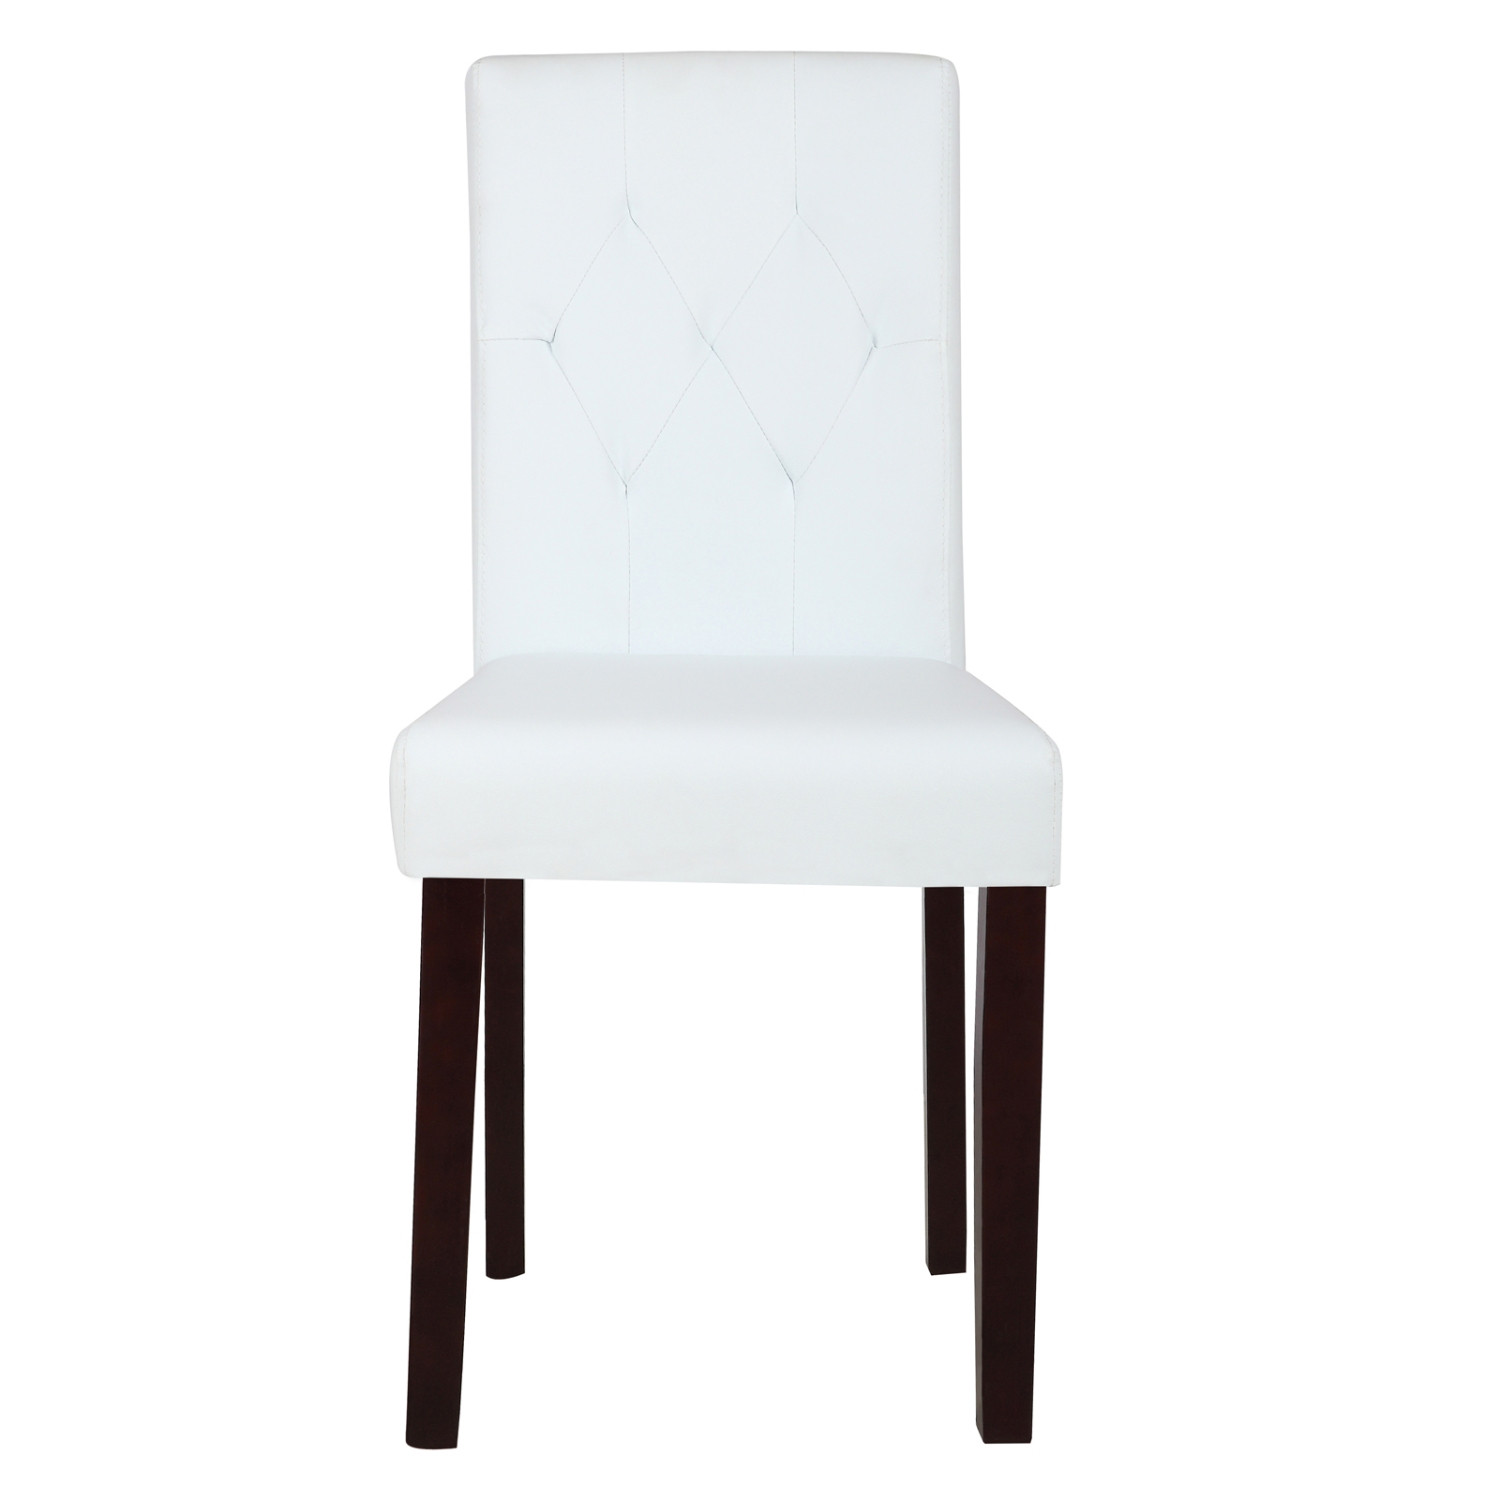 White Leather Kitchen Chairs
 Elegant Ivory White Leather Dining Room Chair Kitchen